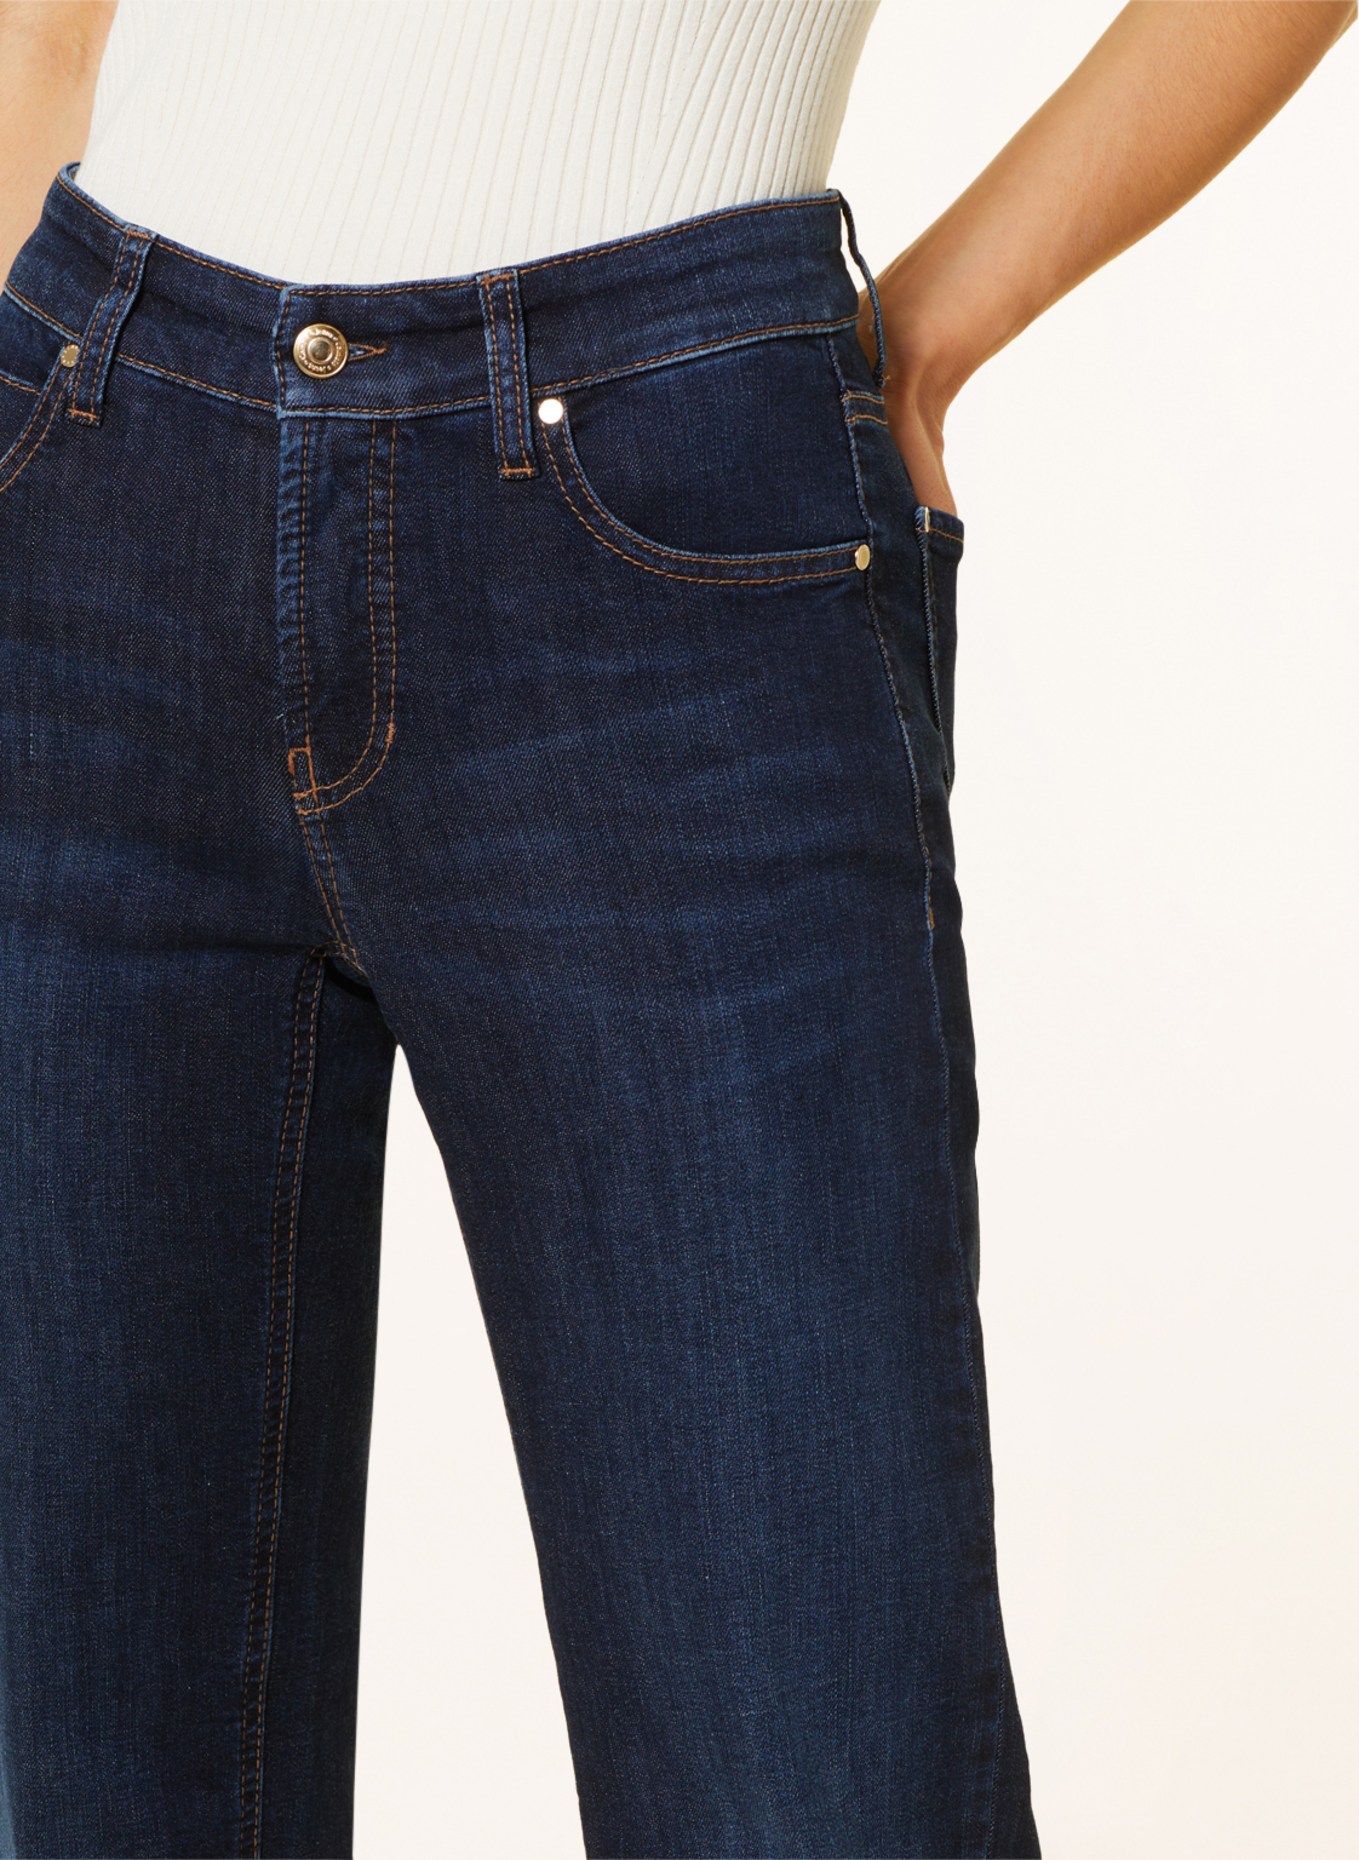 CAMBIO Jeans flared TESS, Kolor: 5030 modern used splinted (Obrazek 5)